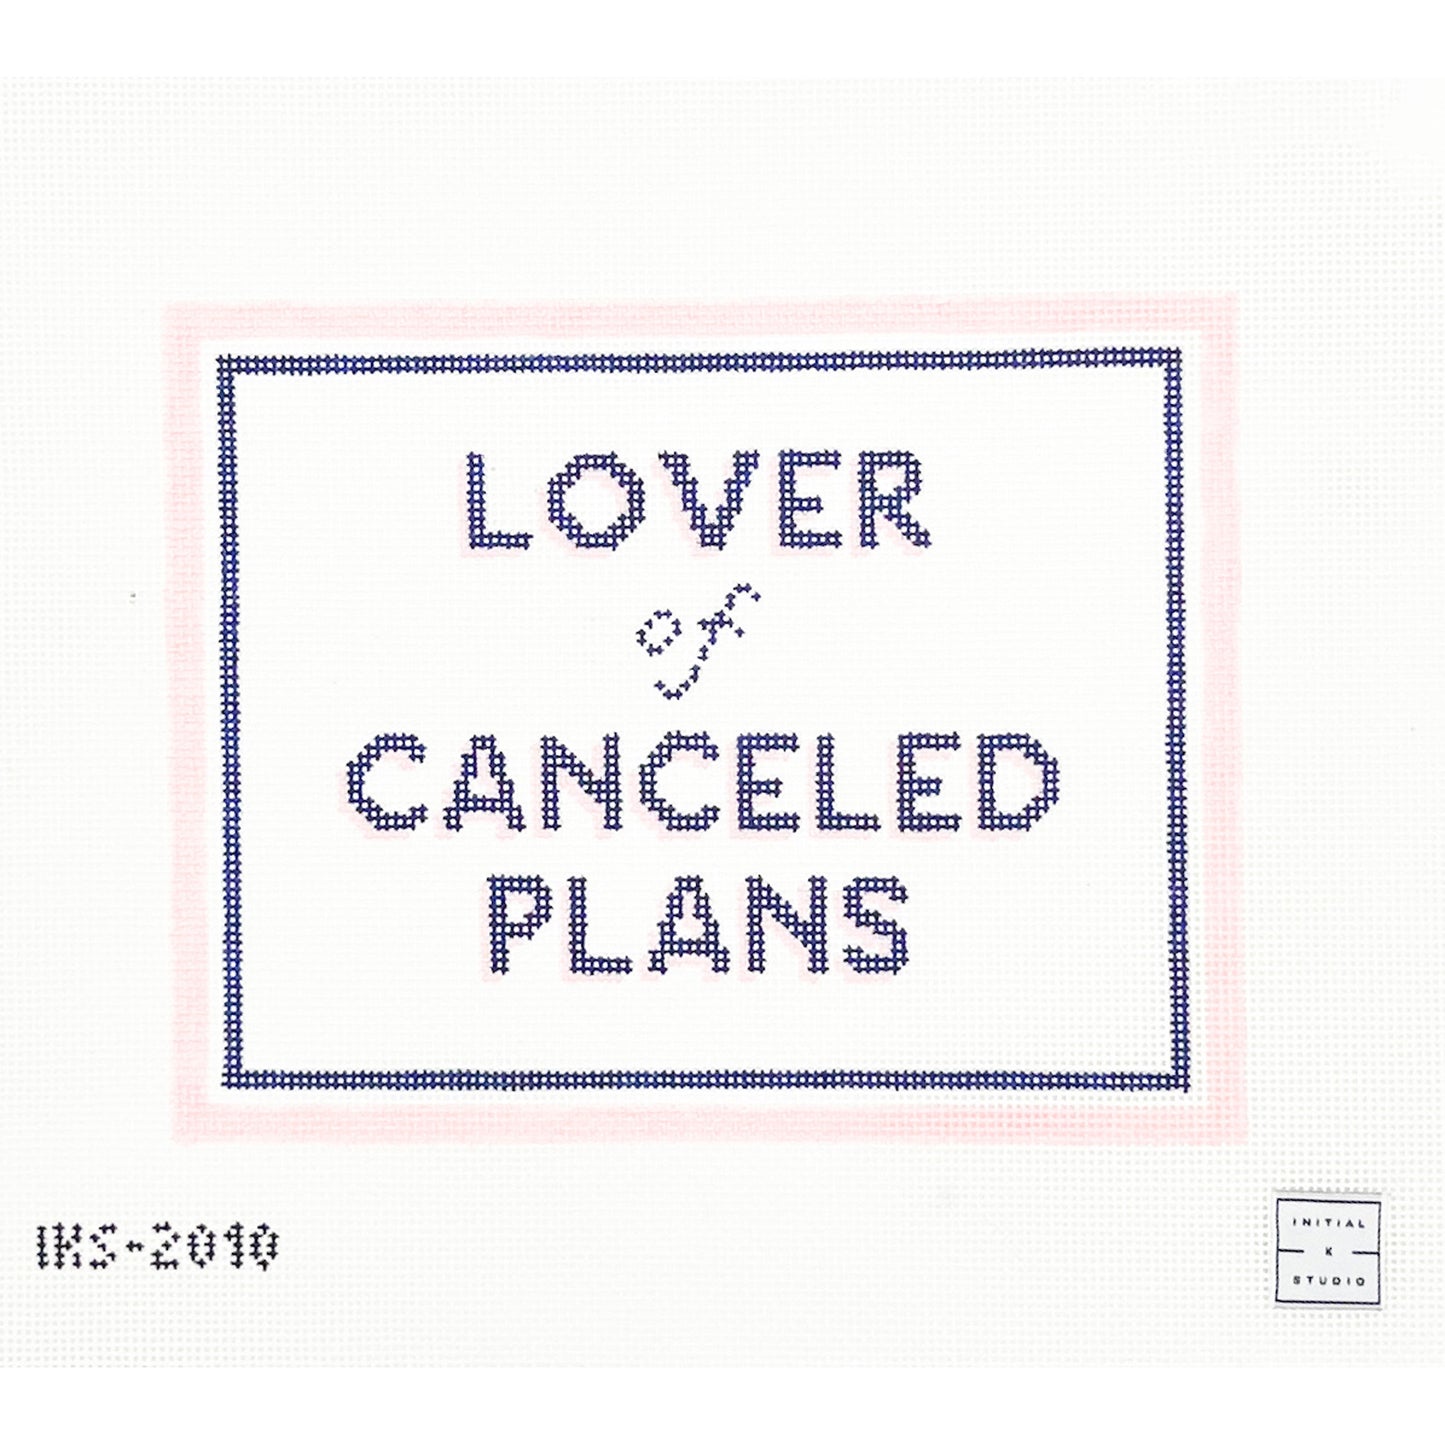 Canceled Plans